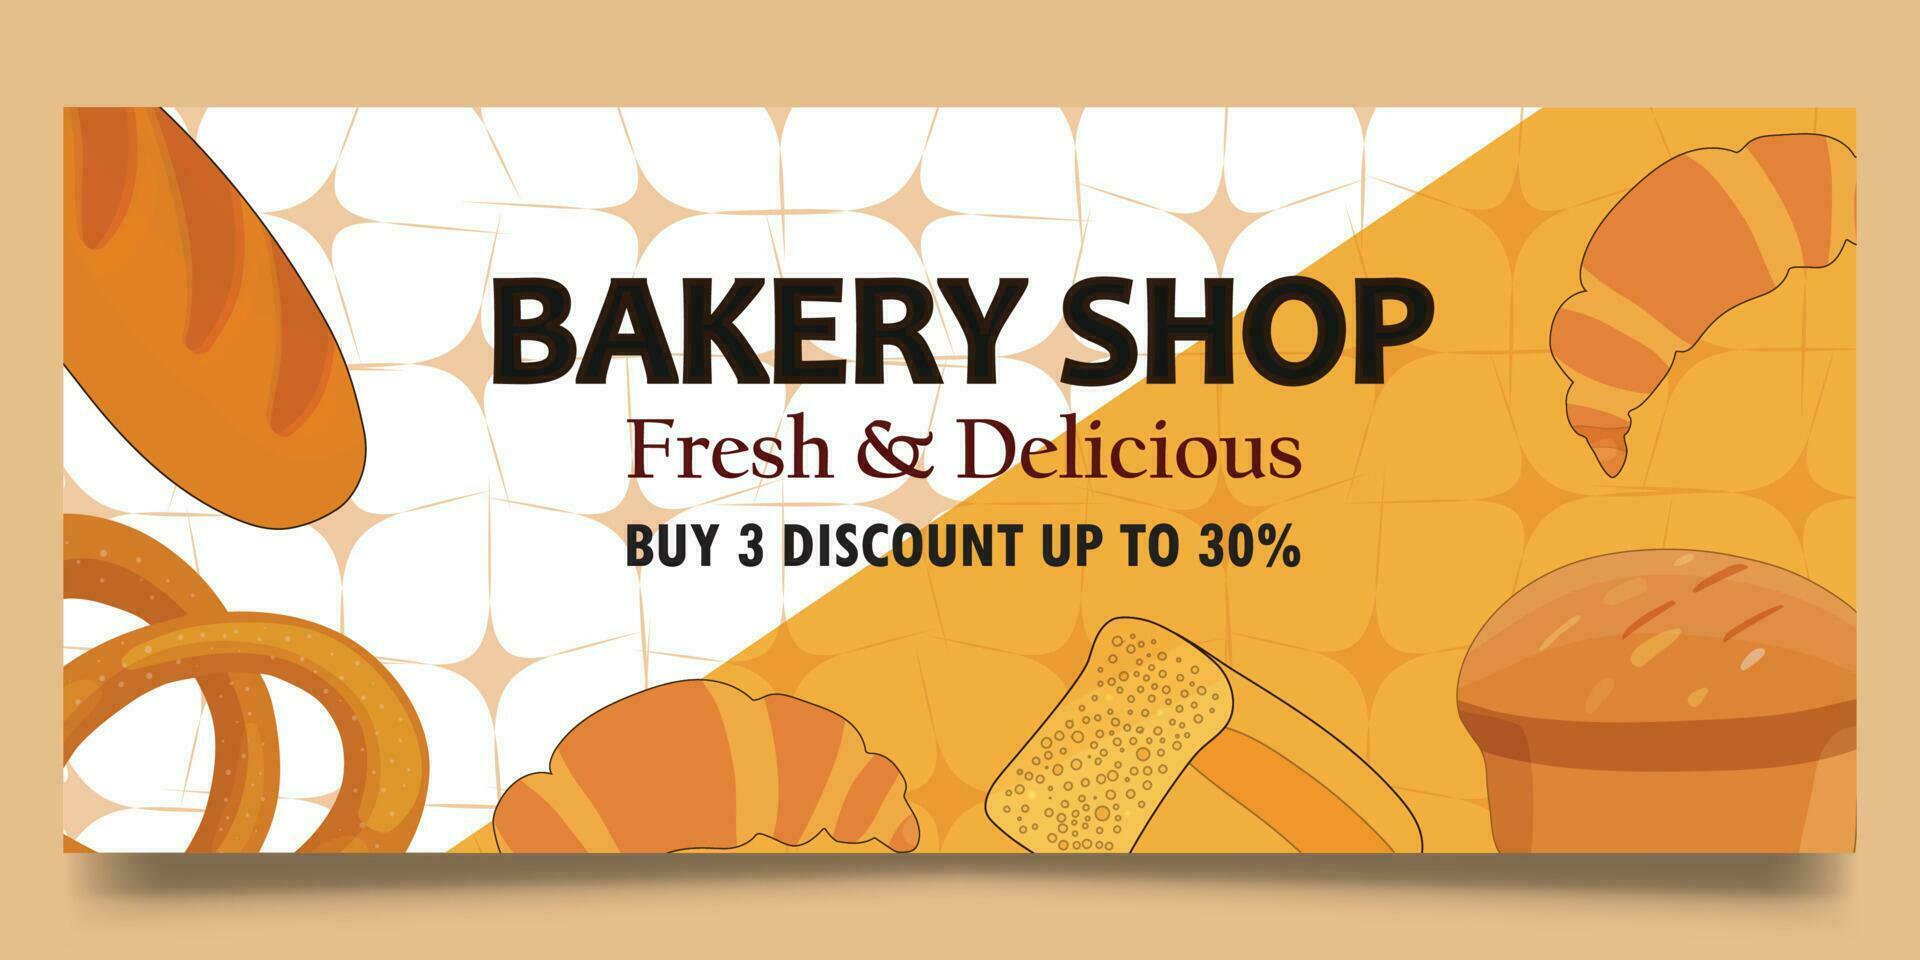 Bakery shop web banner template vector